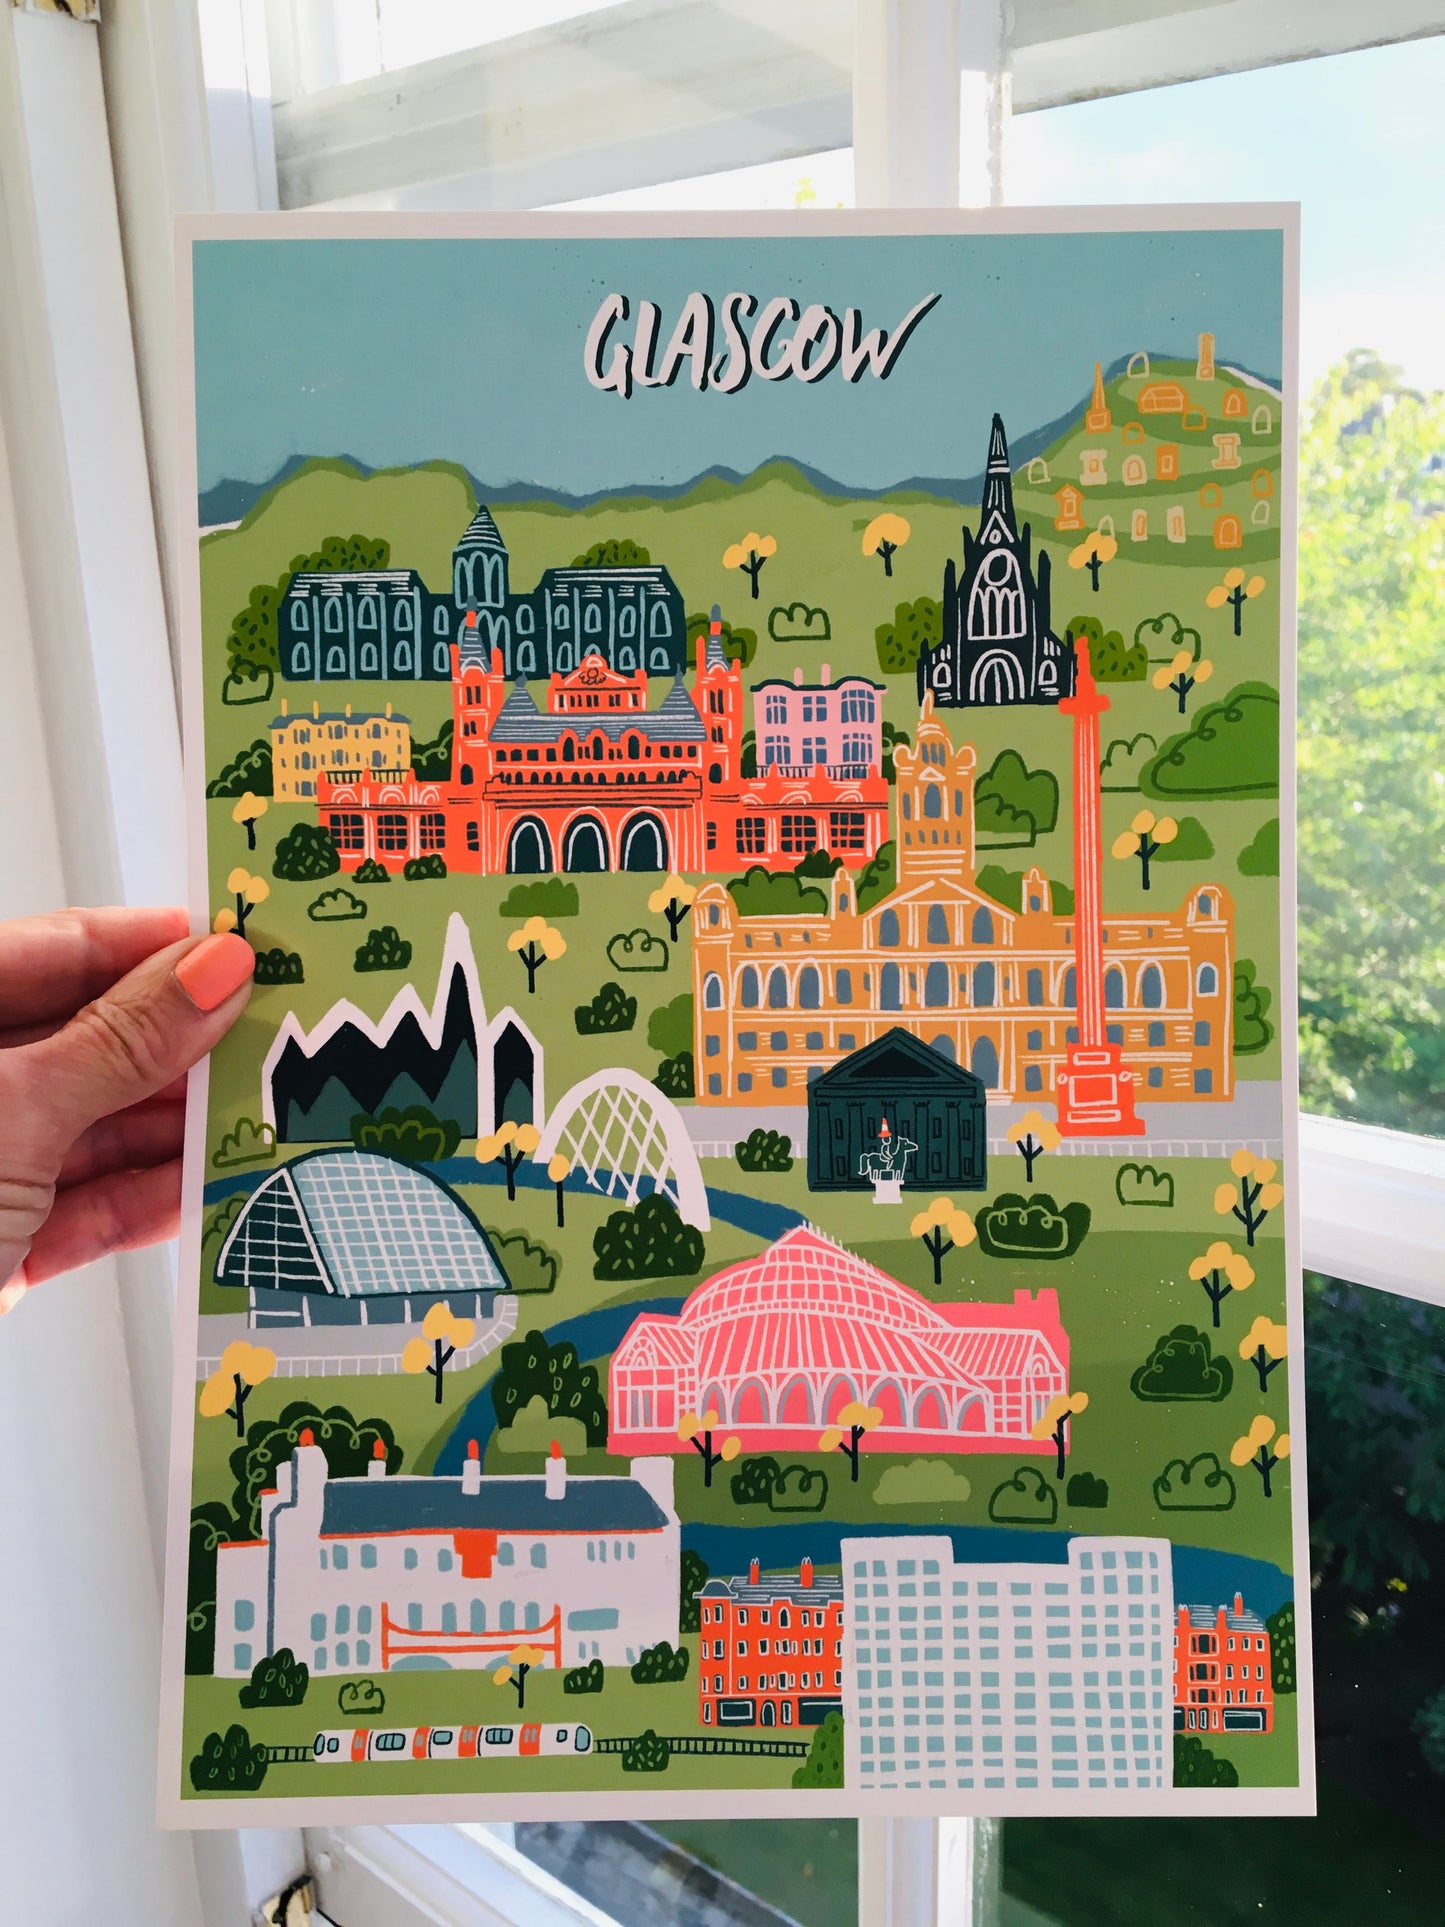 The Glasgow Print